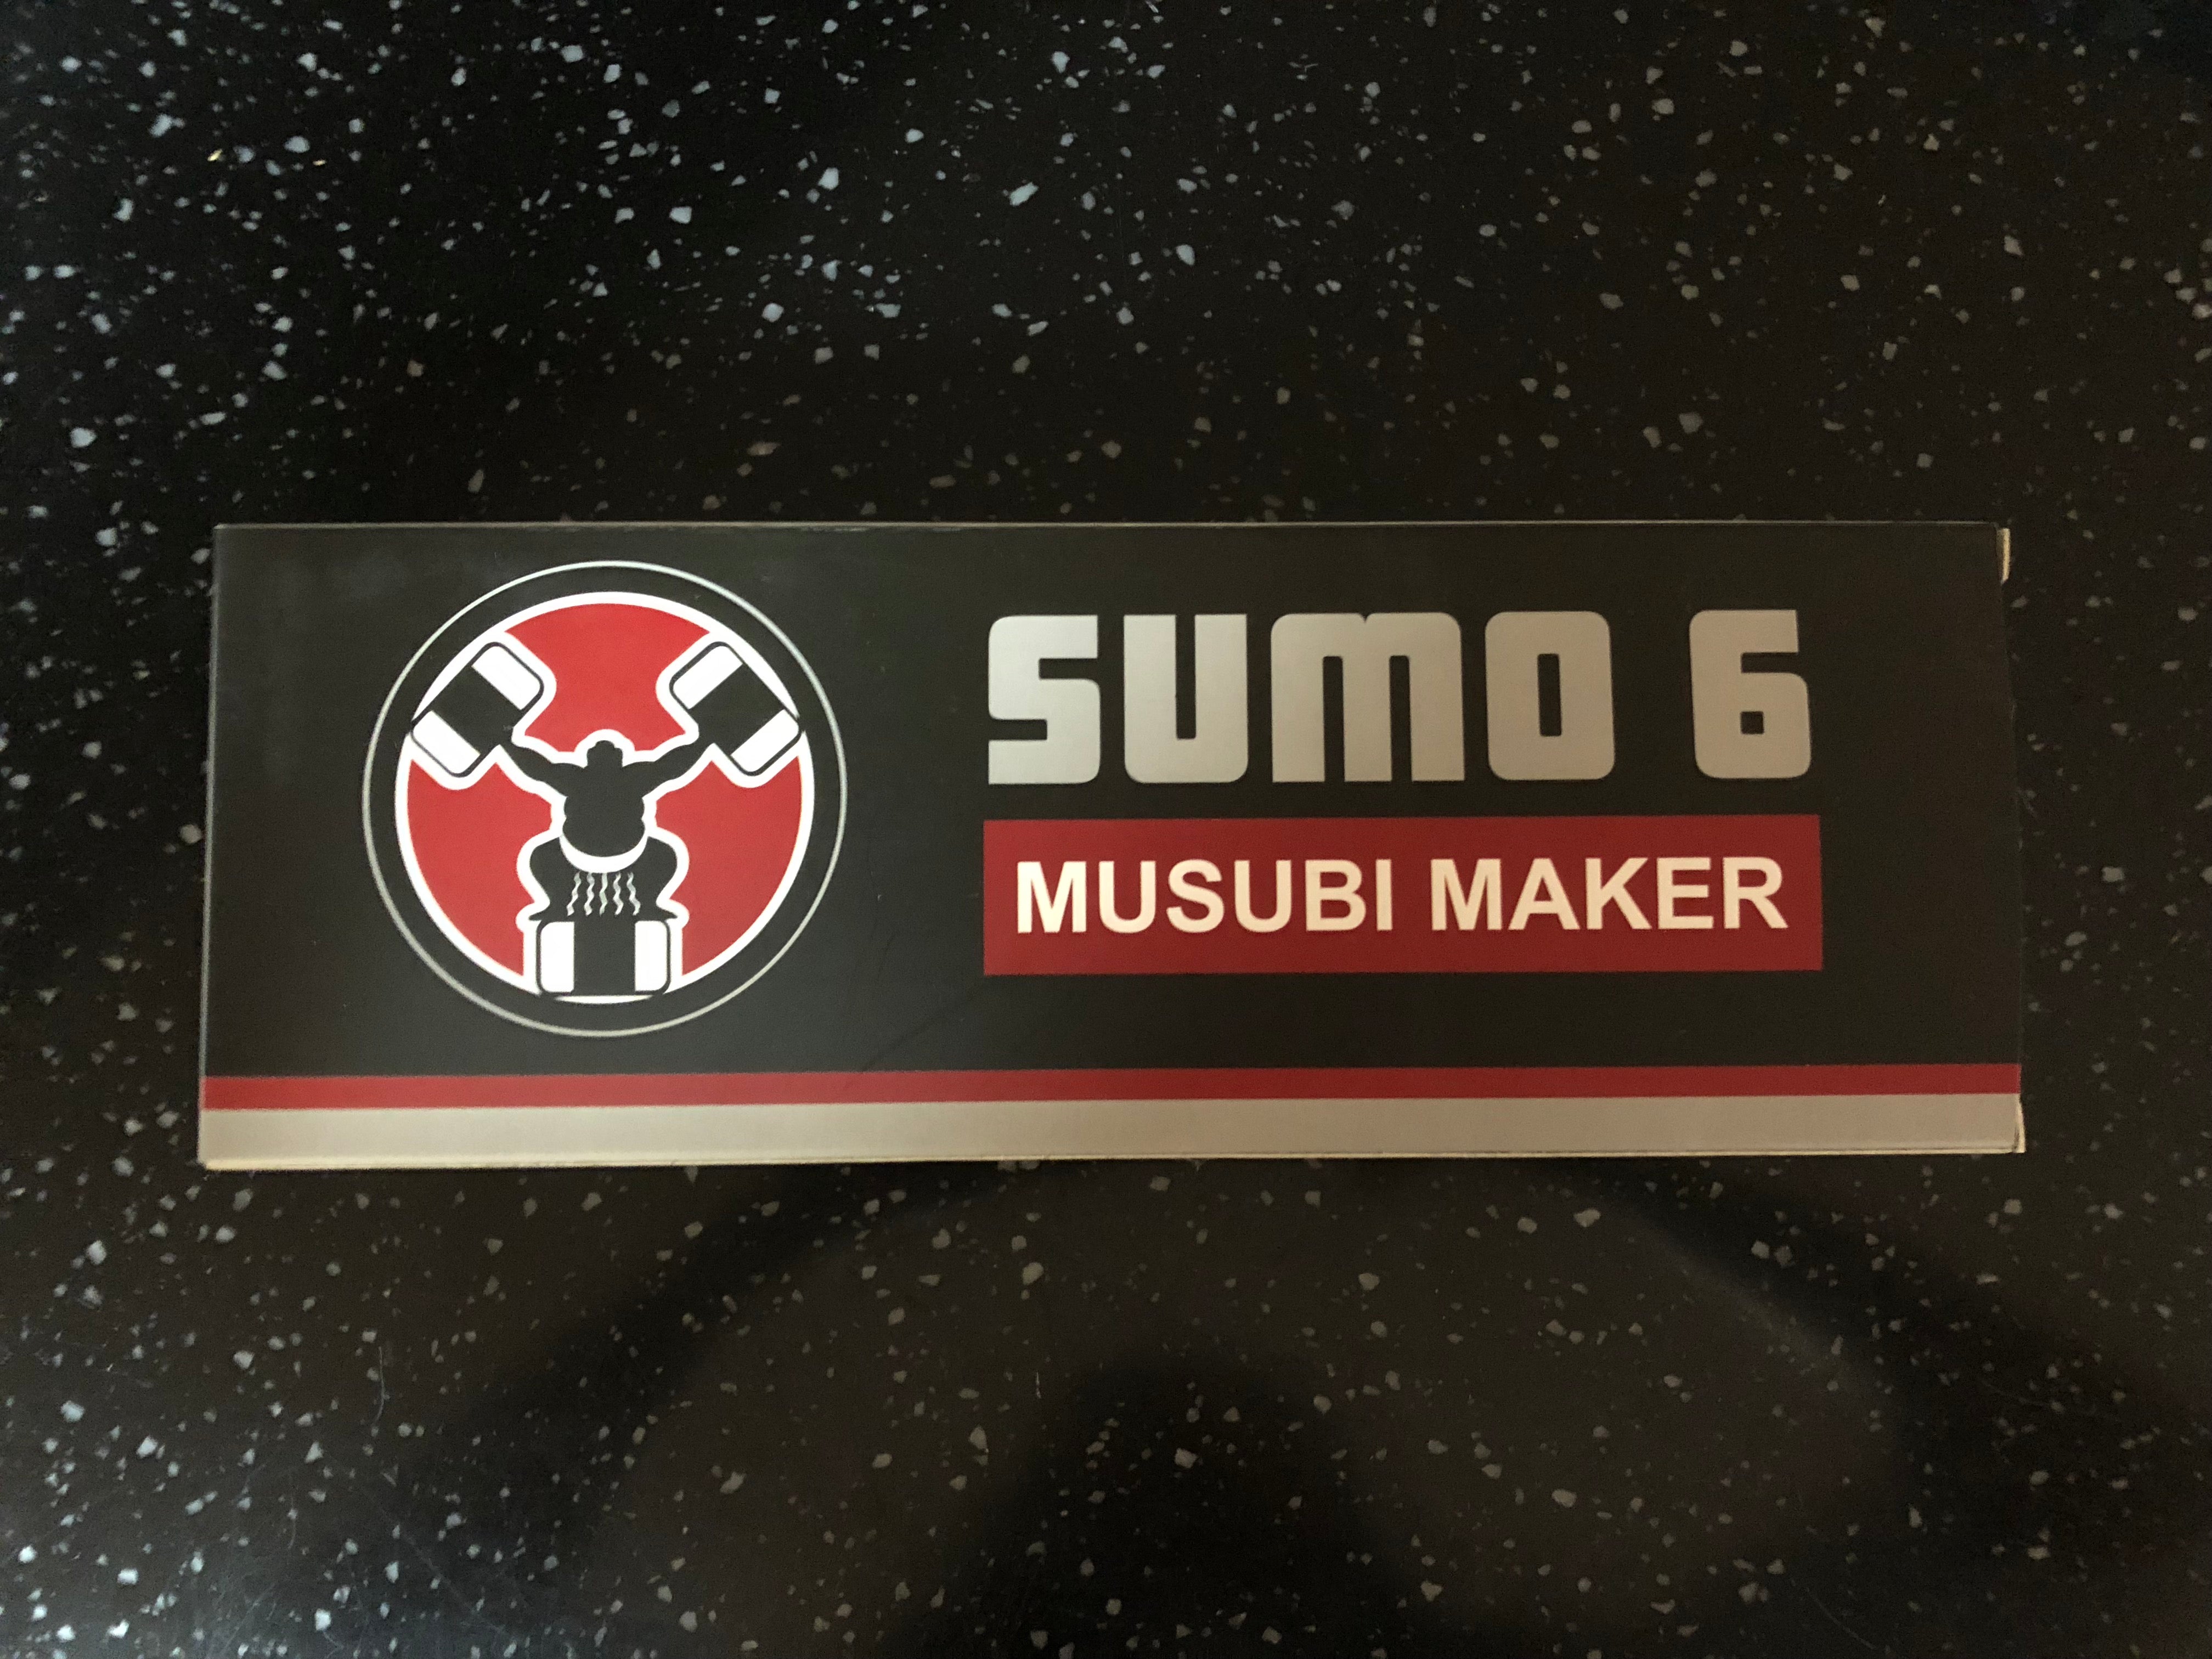 Sumo 6 SETS buy 4 and get a Sumo 4 FREE